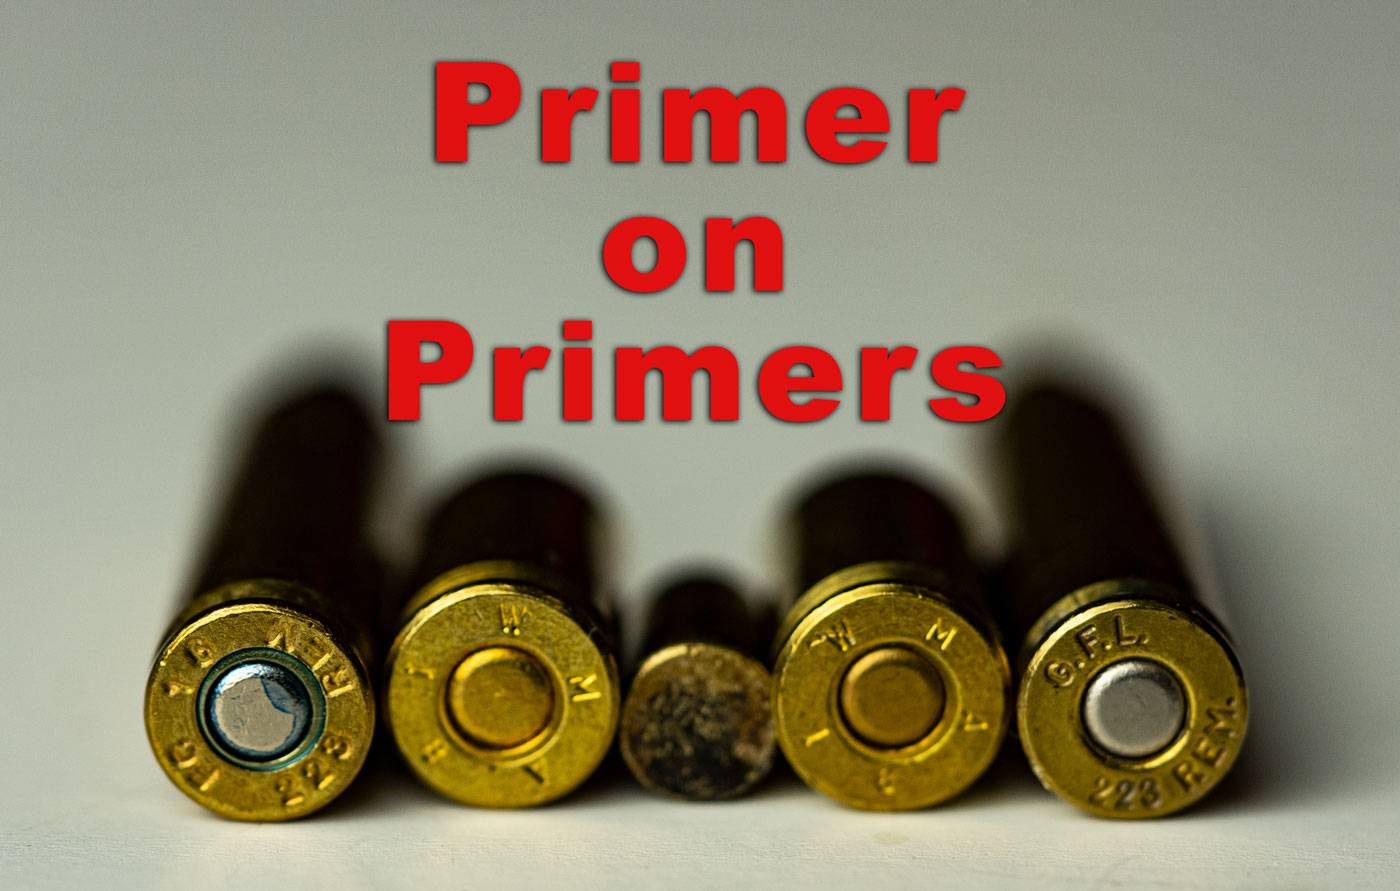 Buy 280 Remington Ammunition Online Under $1000